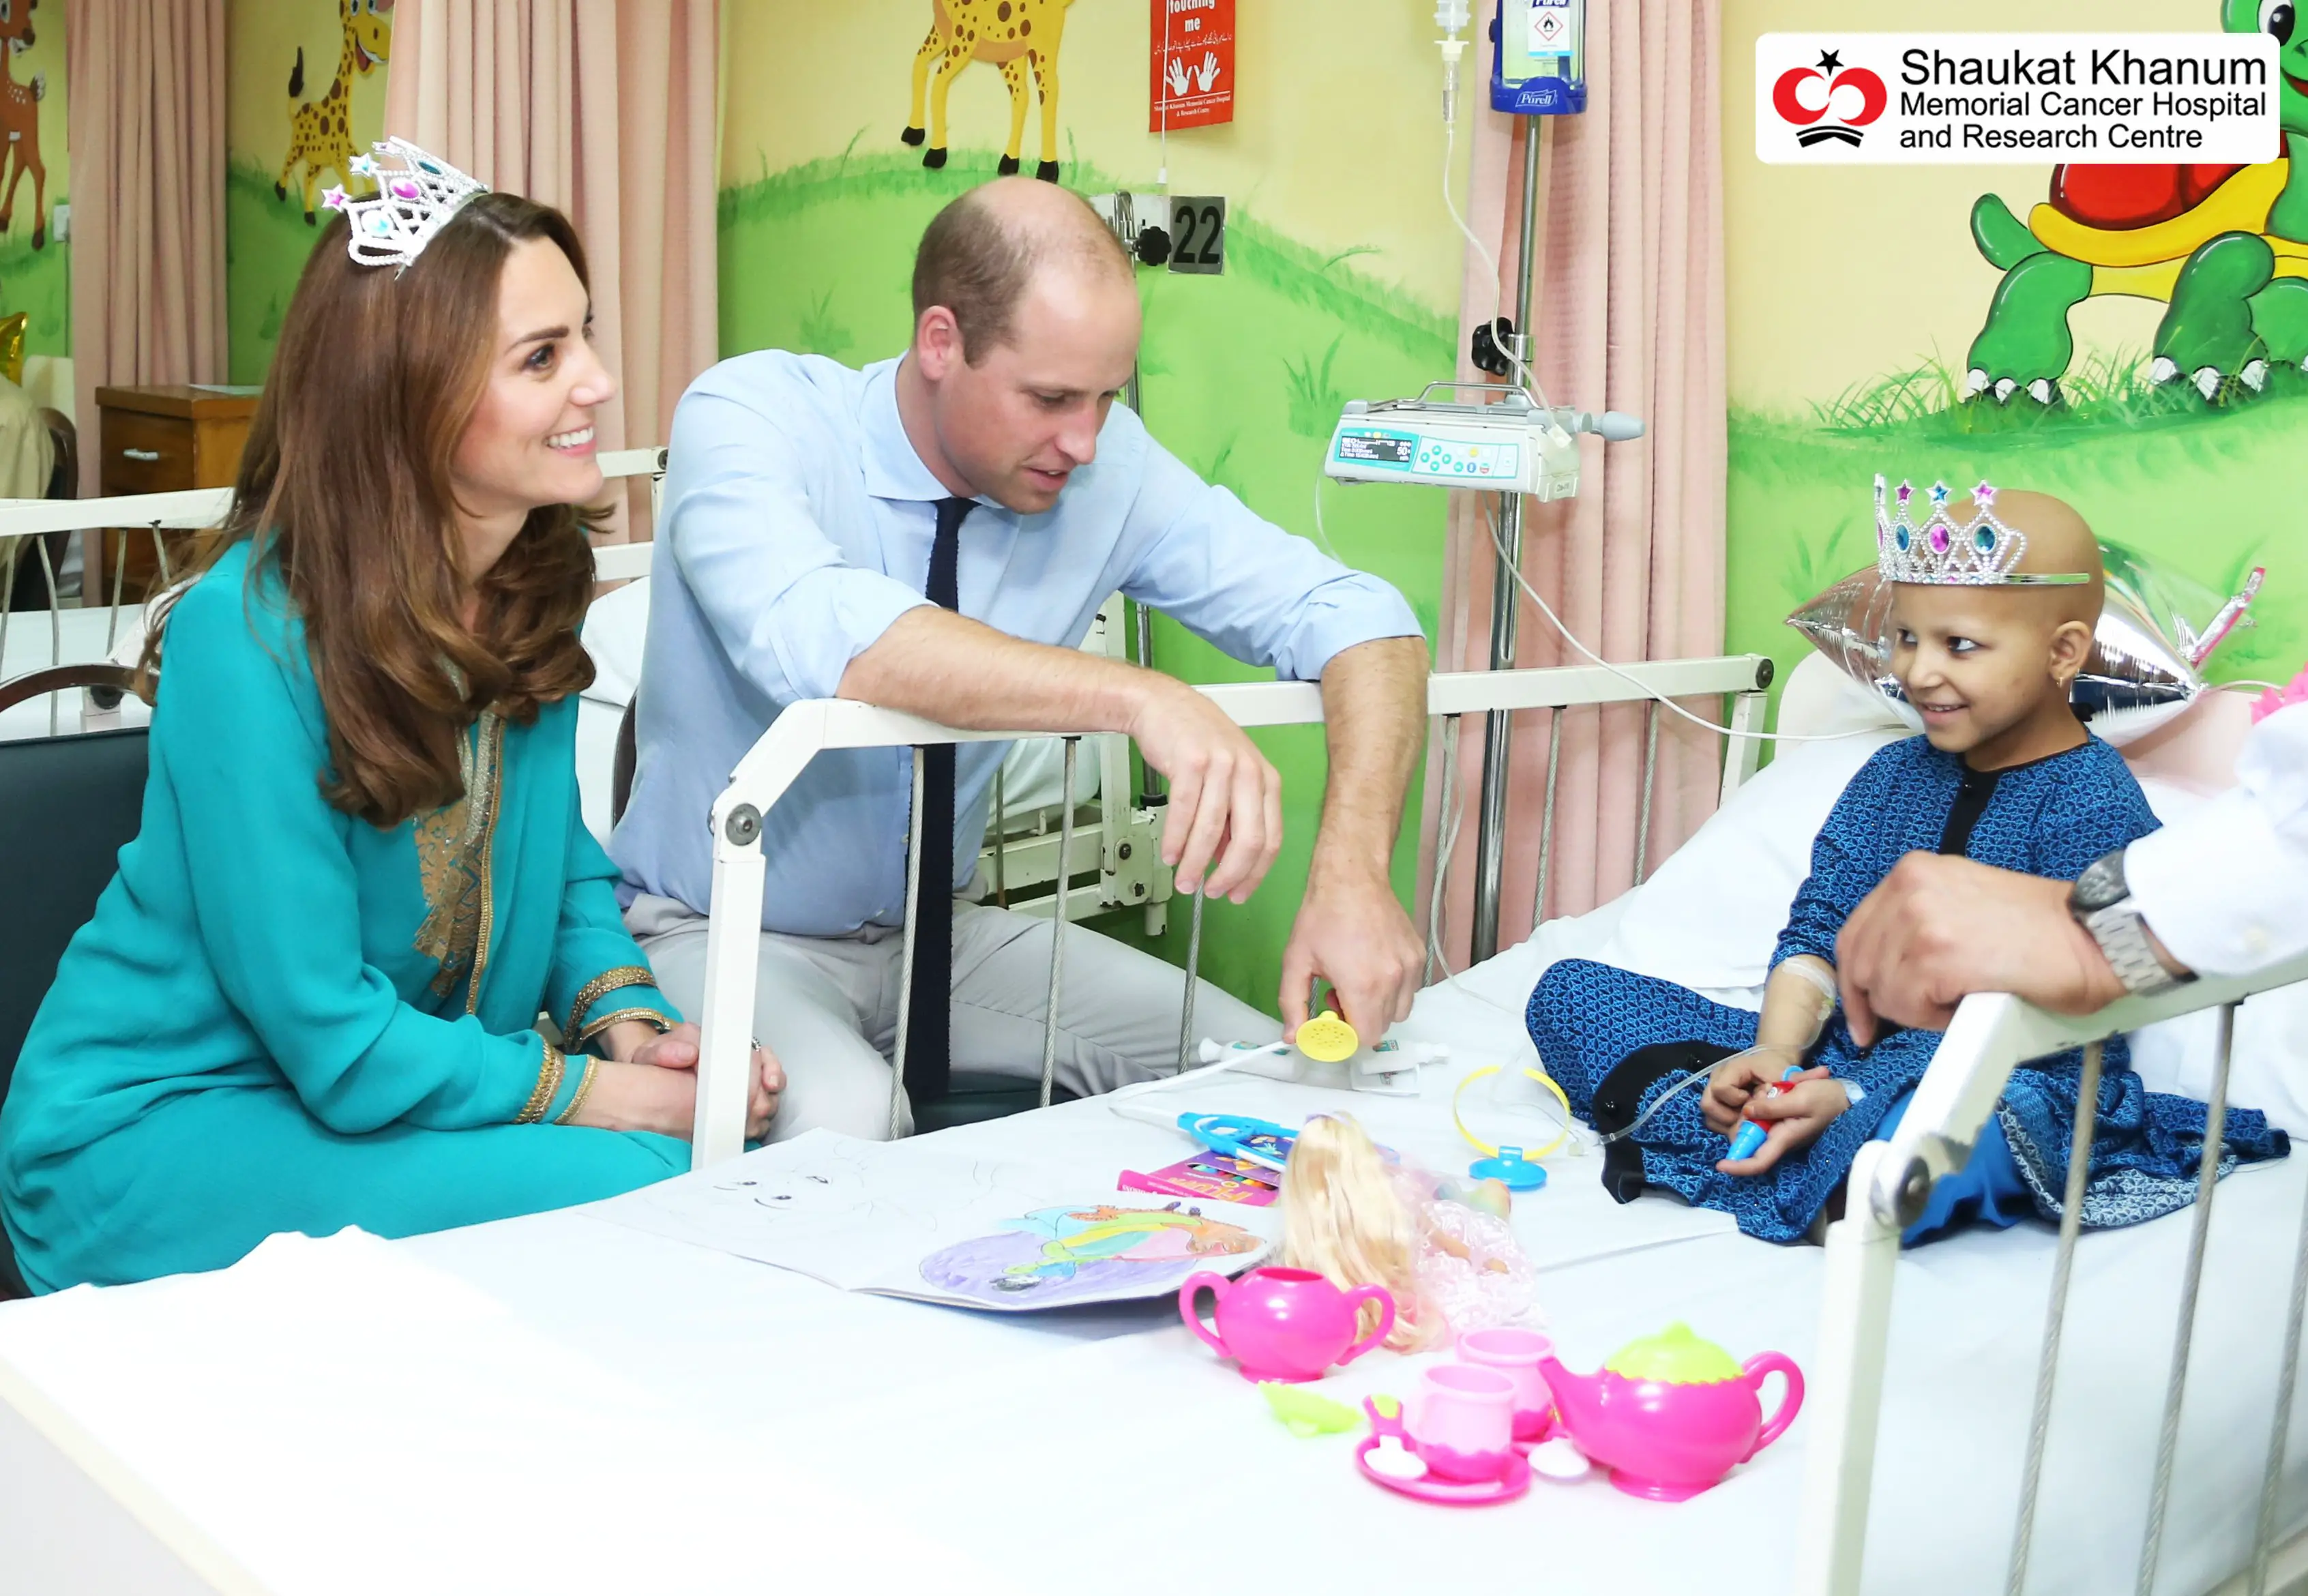 Duke and Duchess of Cambridge visited Shaukat Khanum Hospital in Lahore